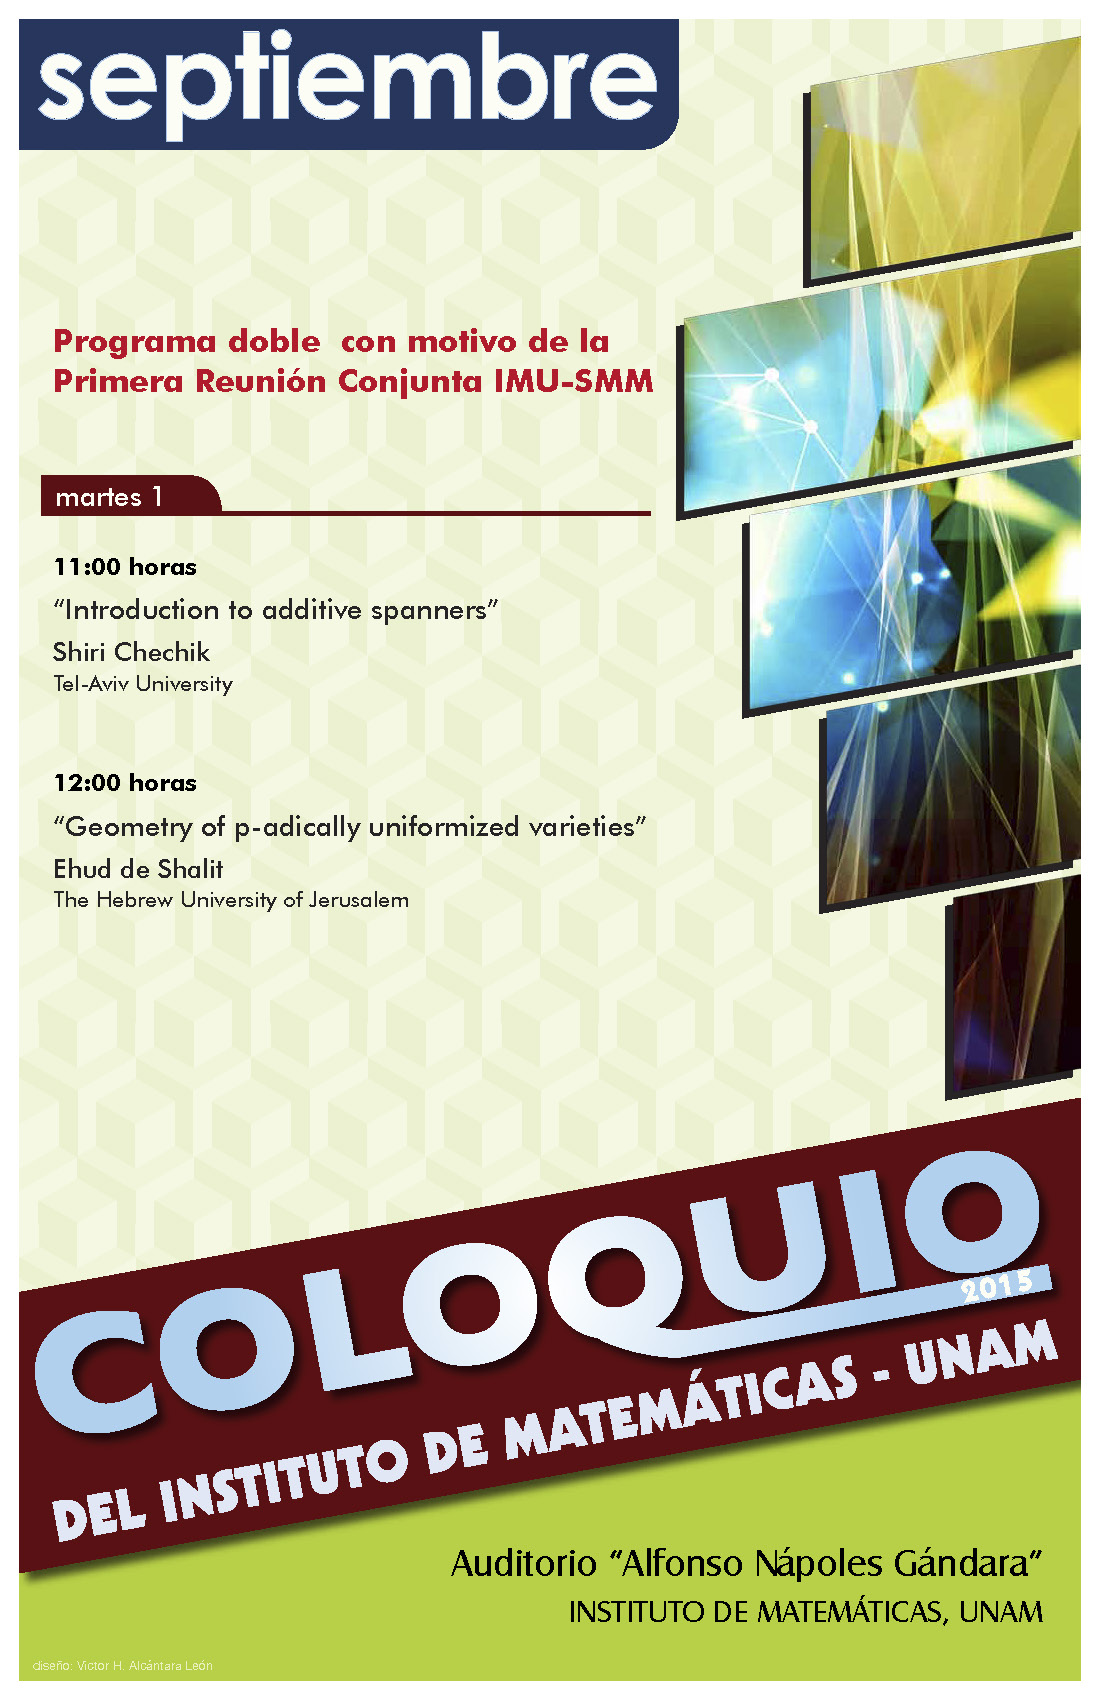 Septiembre: Sesiones para Coloquio (sesión doble)